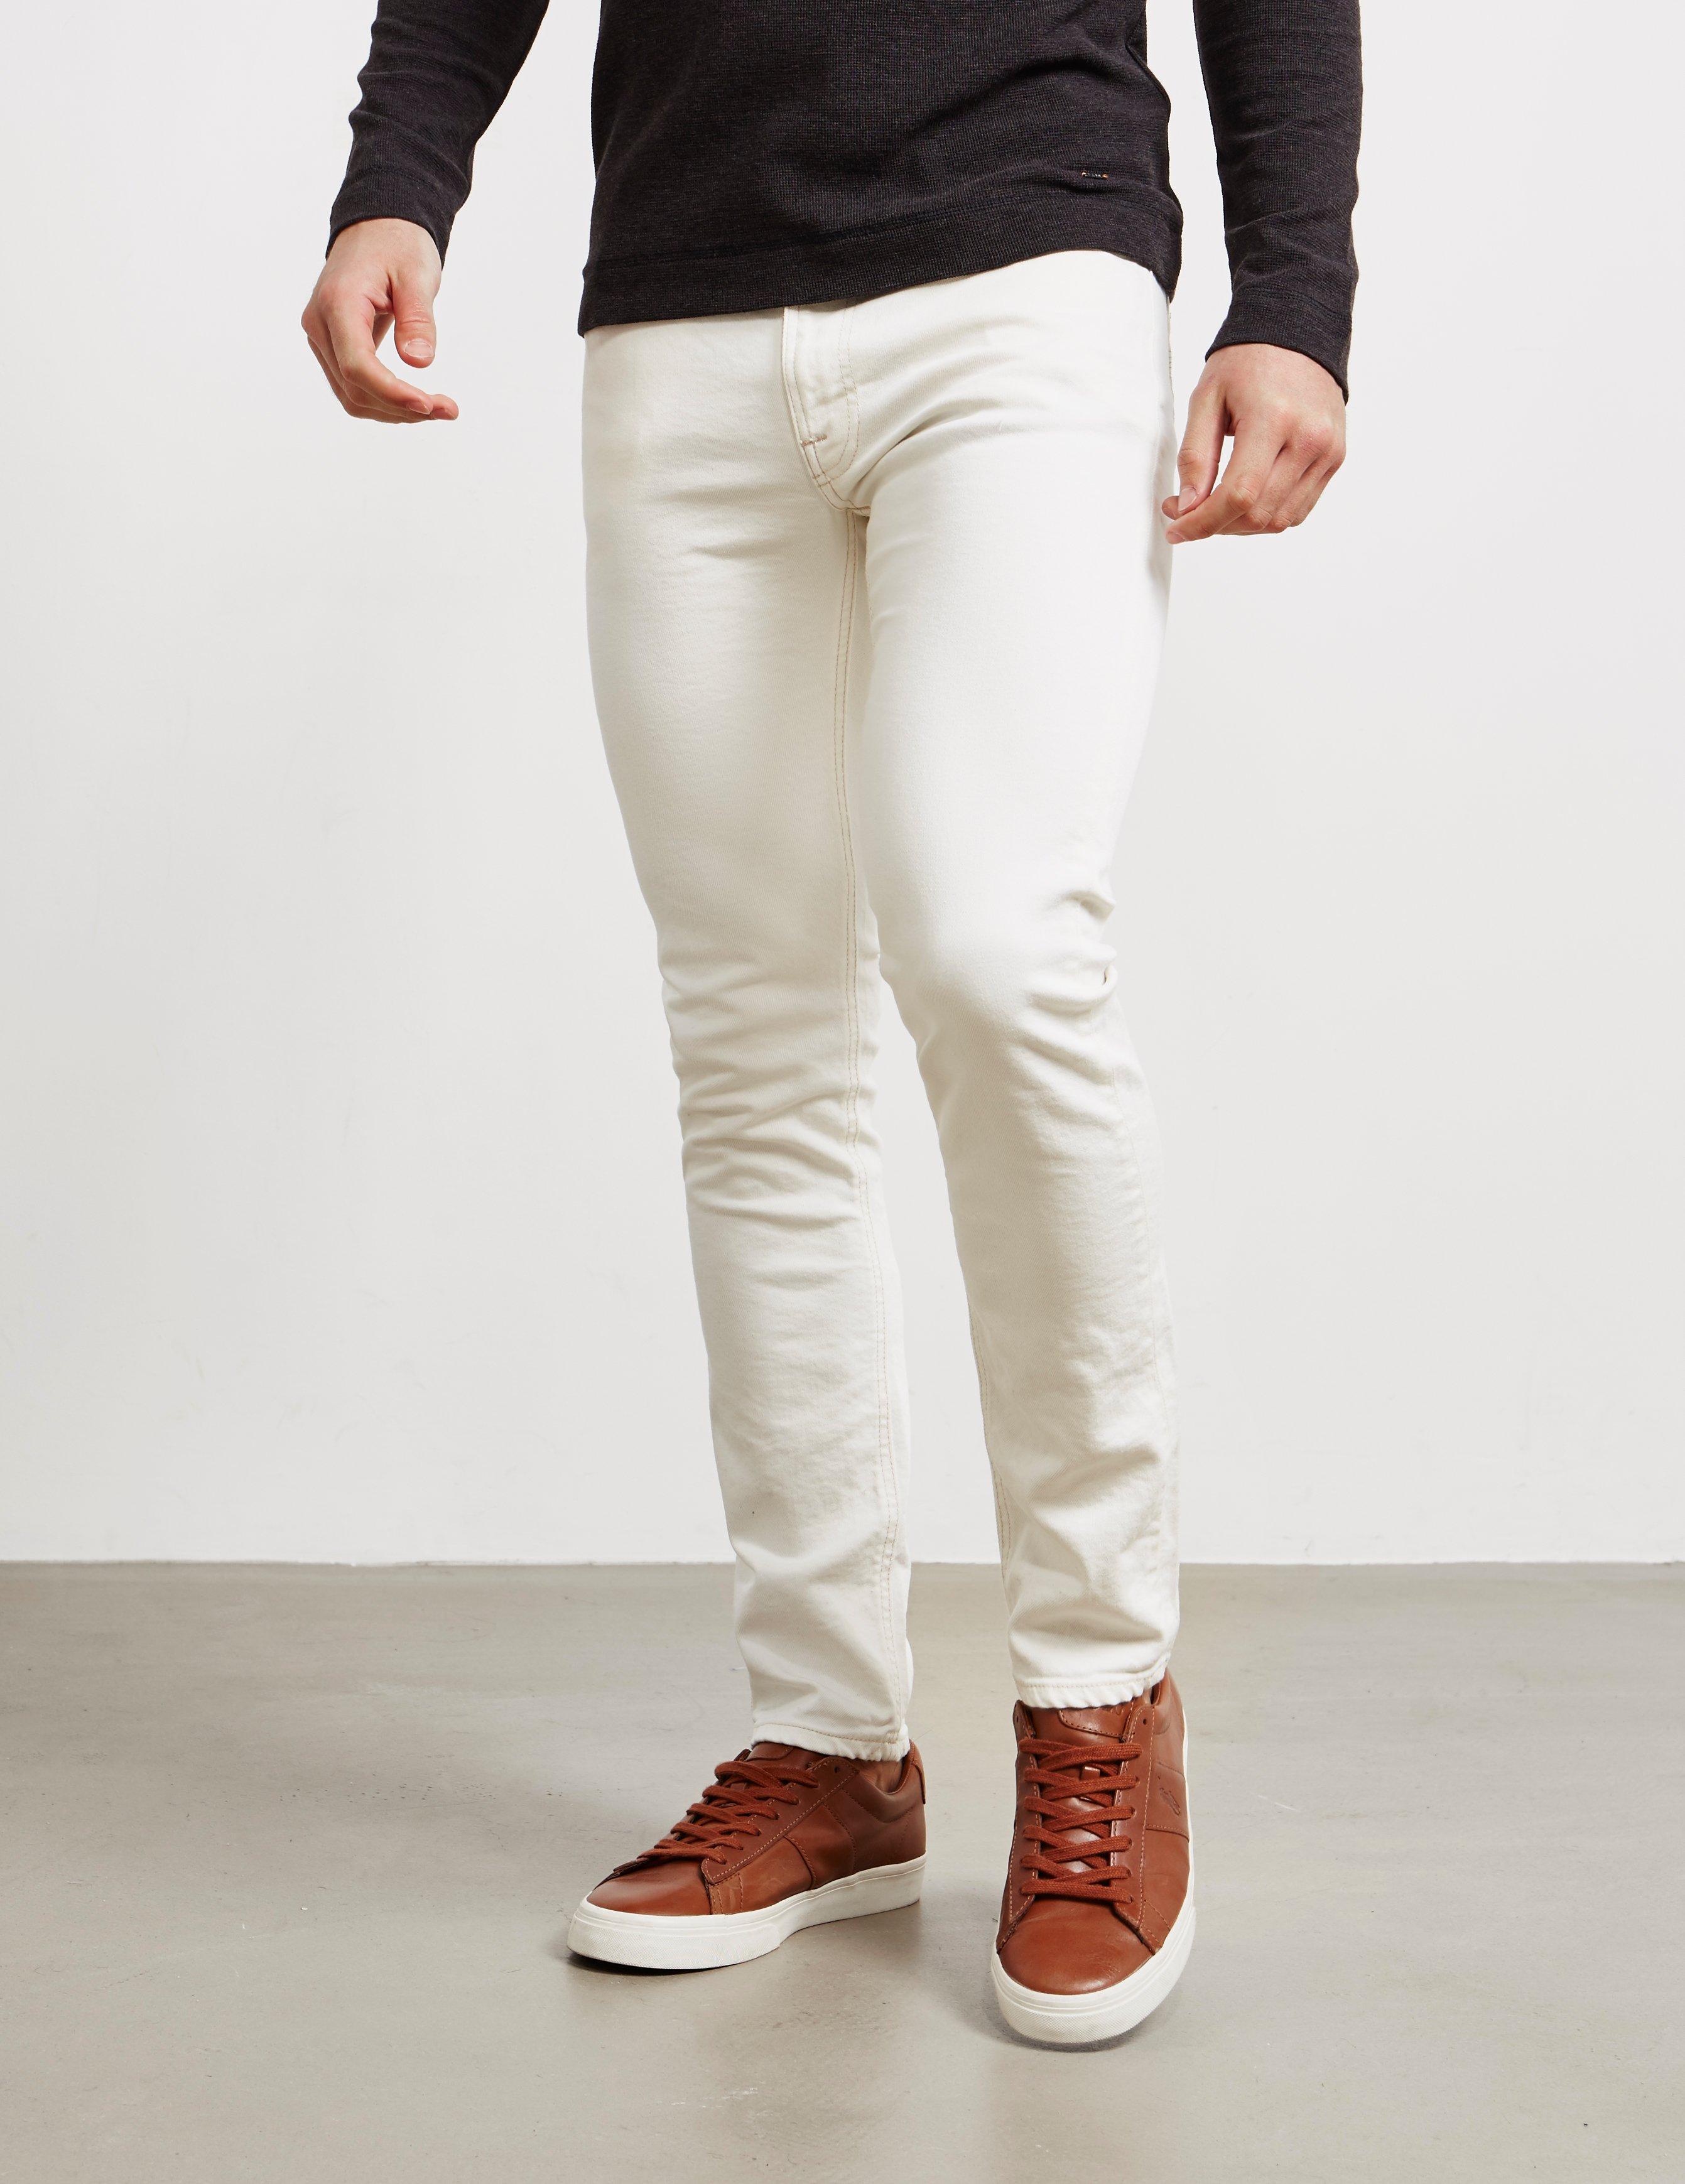 Nudie Jeans Denim Lean Dean Jeans White for Men - Lyst